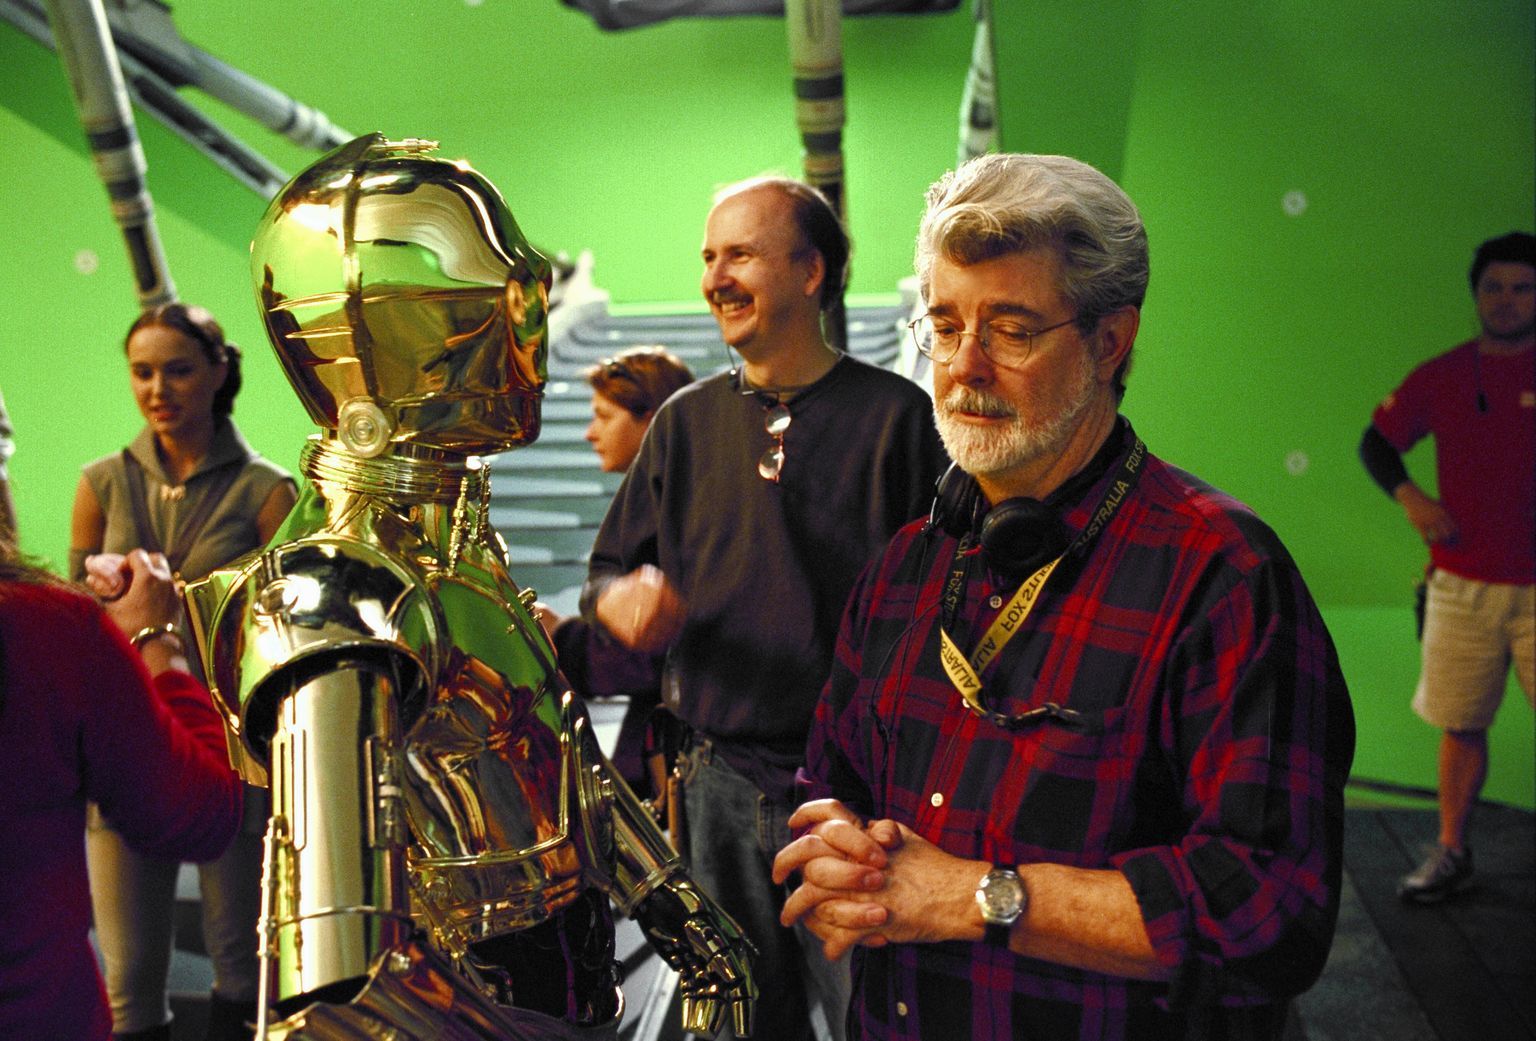 George Lucas, Anthony Daniels and Don Bies in Zvaigzdziu karai. Situ kerstas (2005)